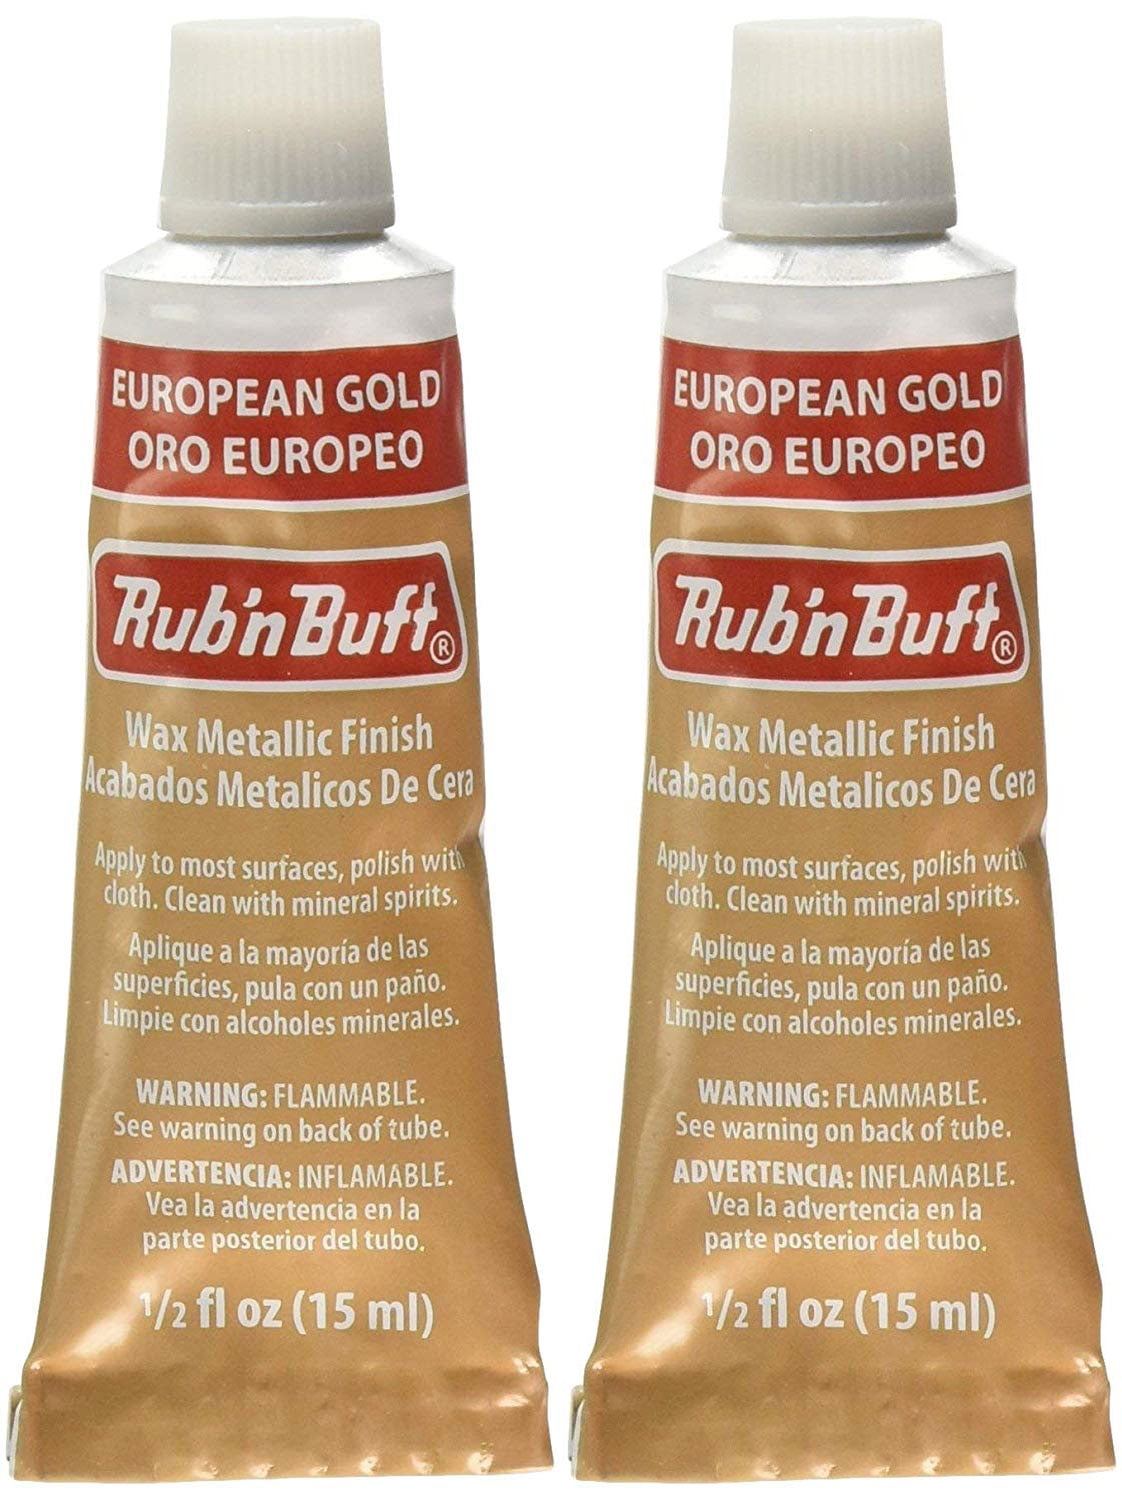 Amaco Rub N Buff Wax Metallic Finish Gold Kit - Antique Gold Autumn Gold European Gold Gold Leaf Grecian Gold 15ml Tubes - Versatile Gilding Wax for